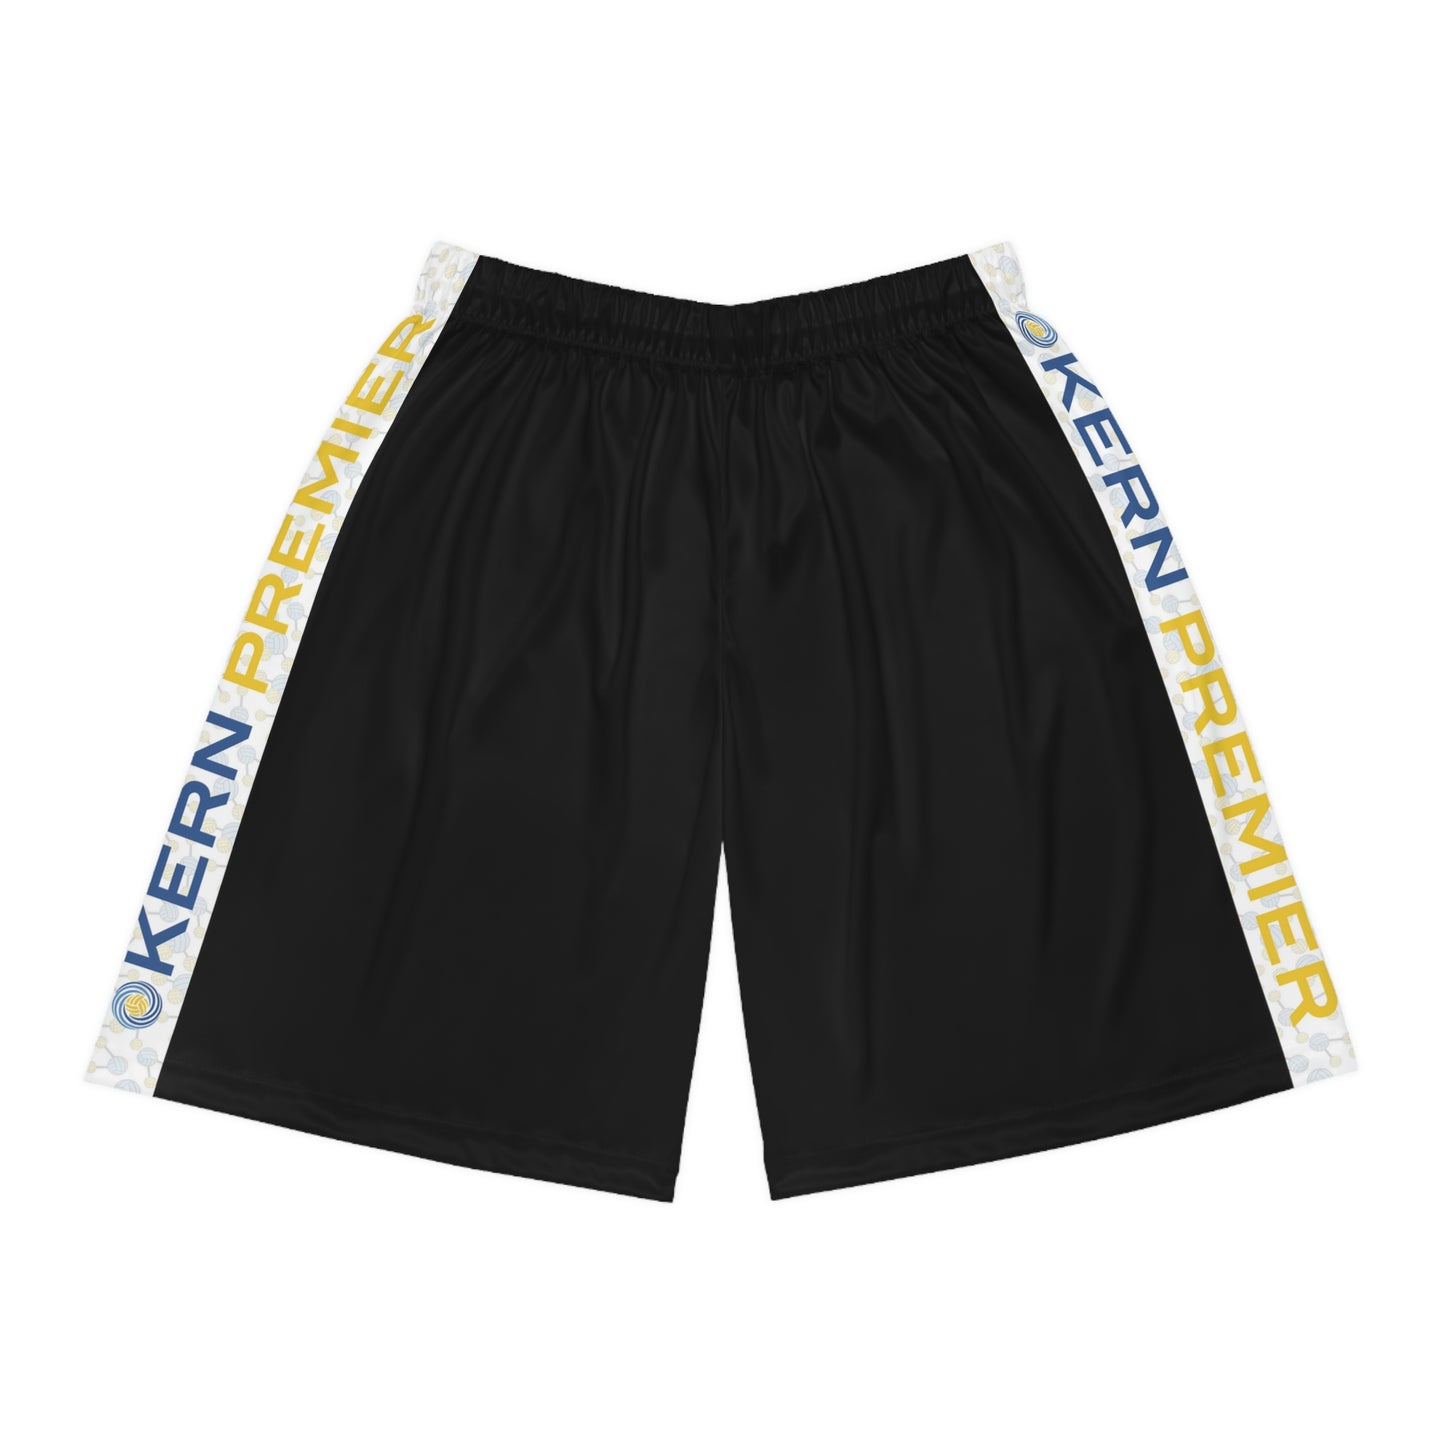 Kern Premier - Black Shorts with Logo - Basketball Shorts